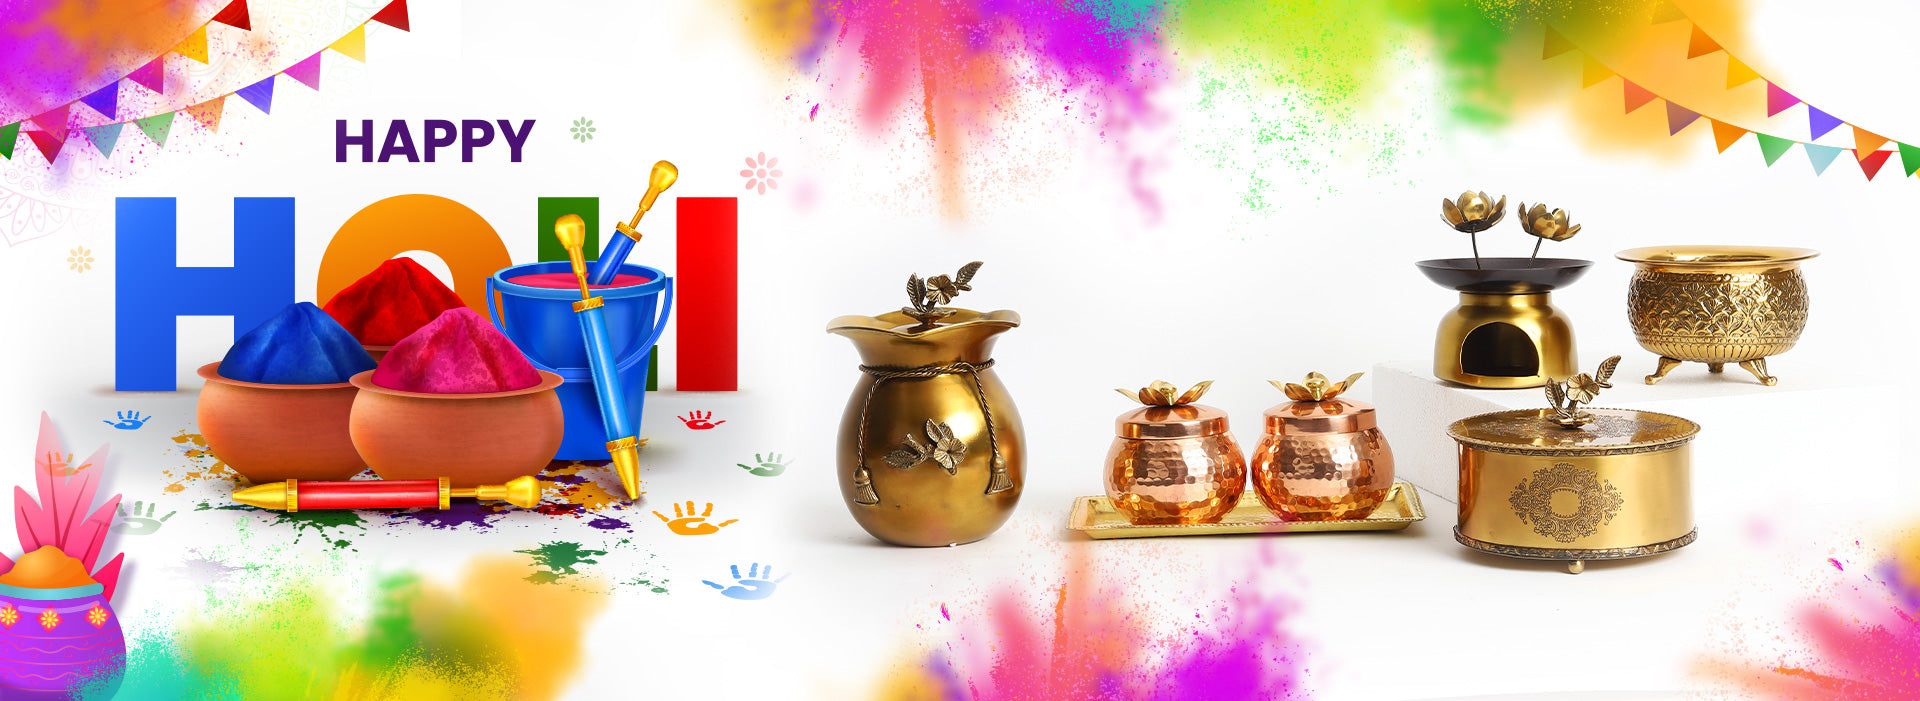 Holi Happiness: Celebrate the Festival of Colors with Chokhi Dhani Kalagram